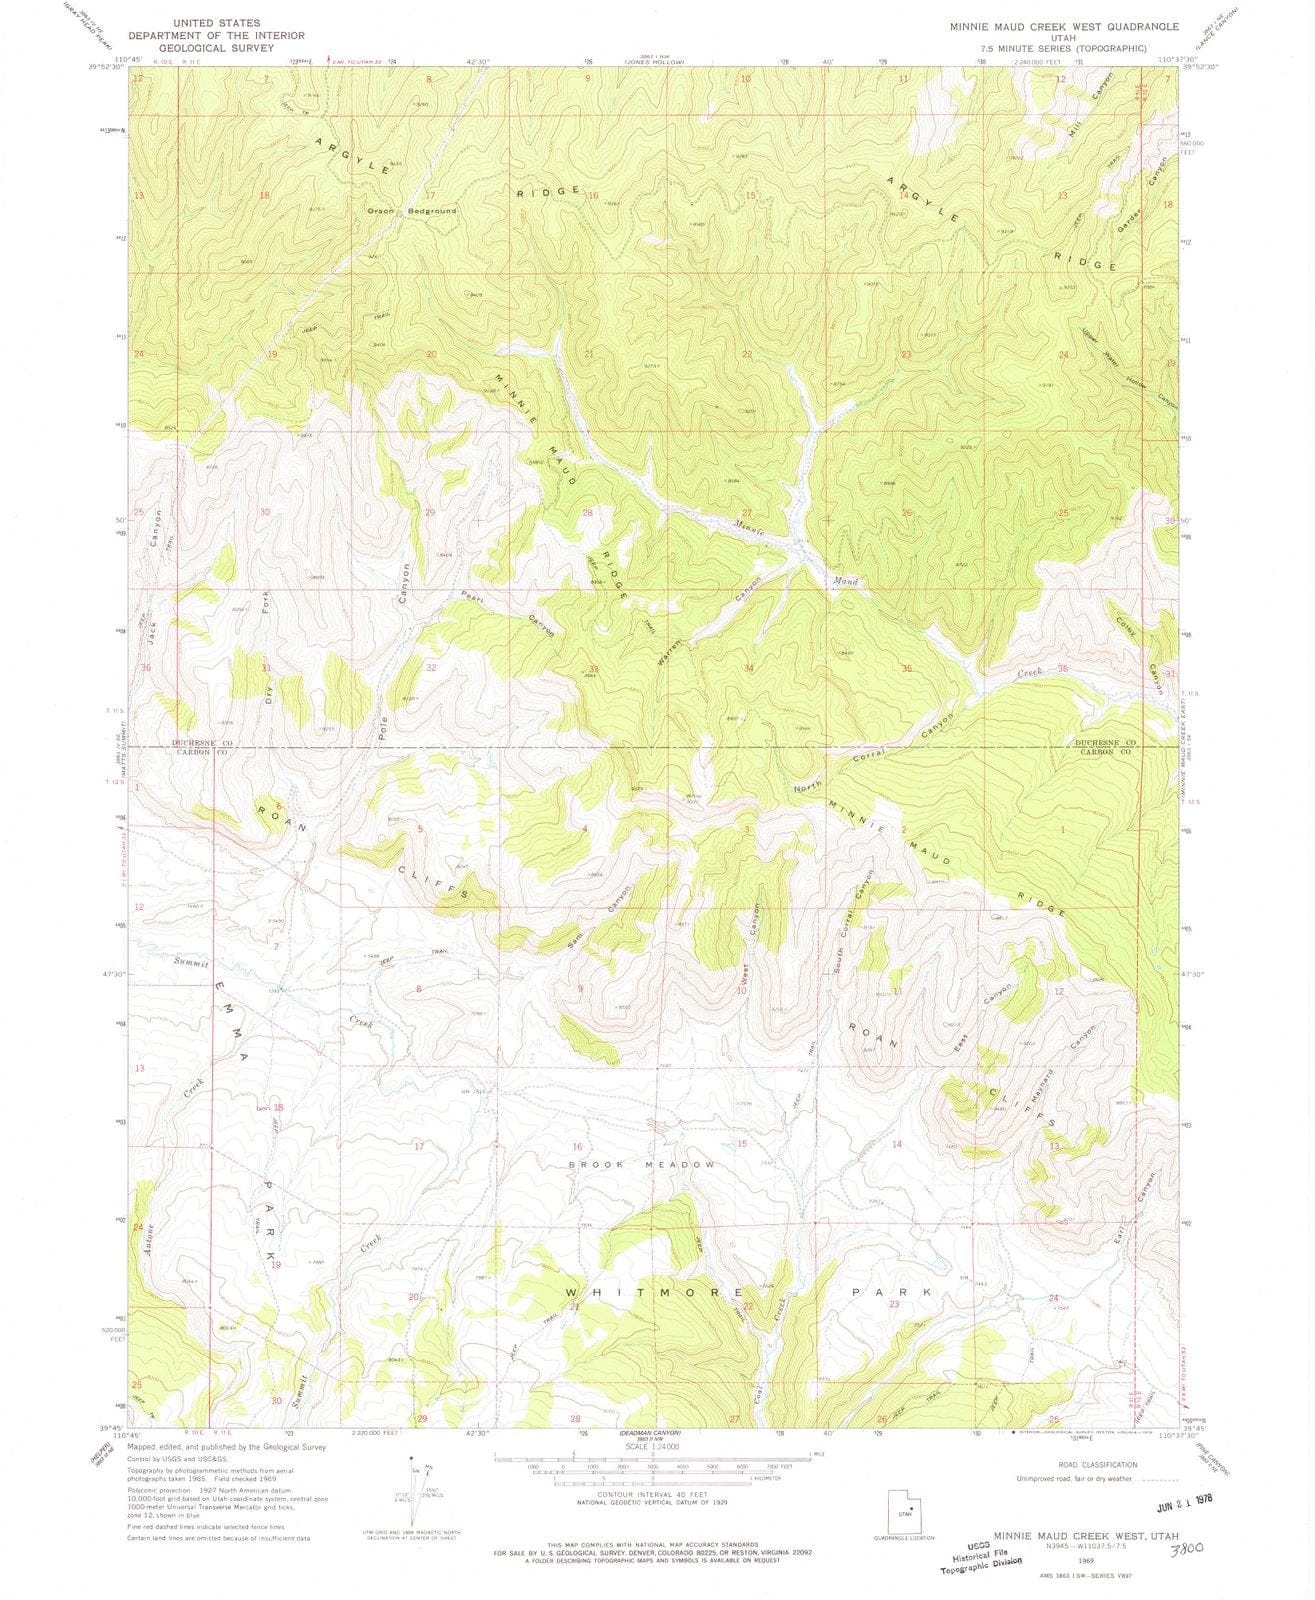 1969 Minnie Maud Creek West, UT - Utah - USGS Topographic Map